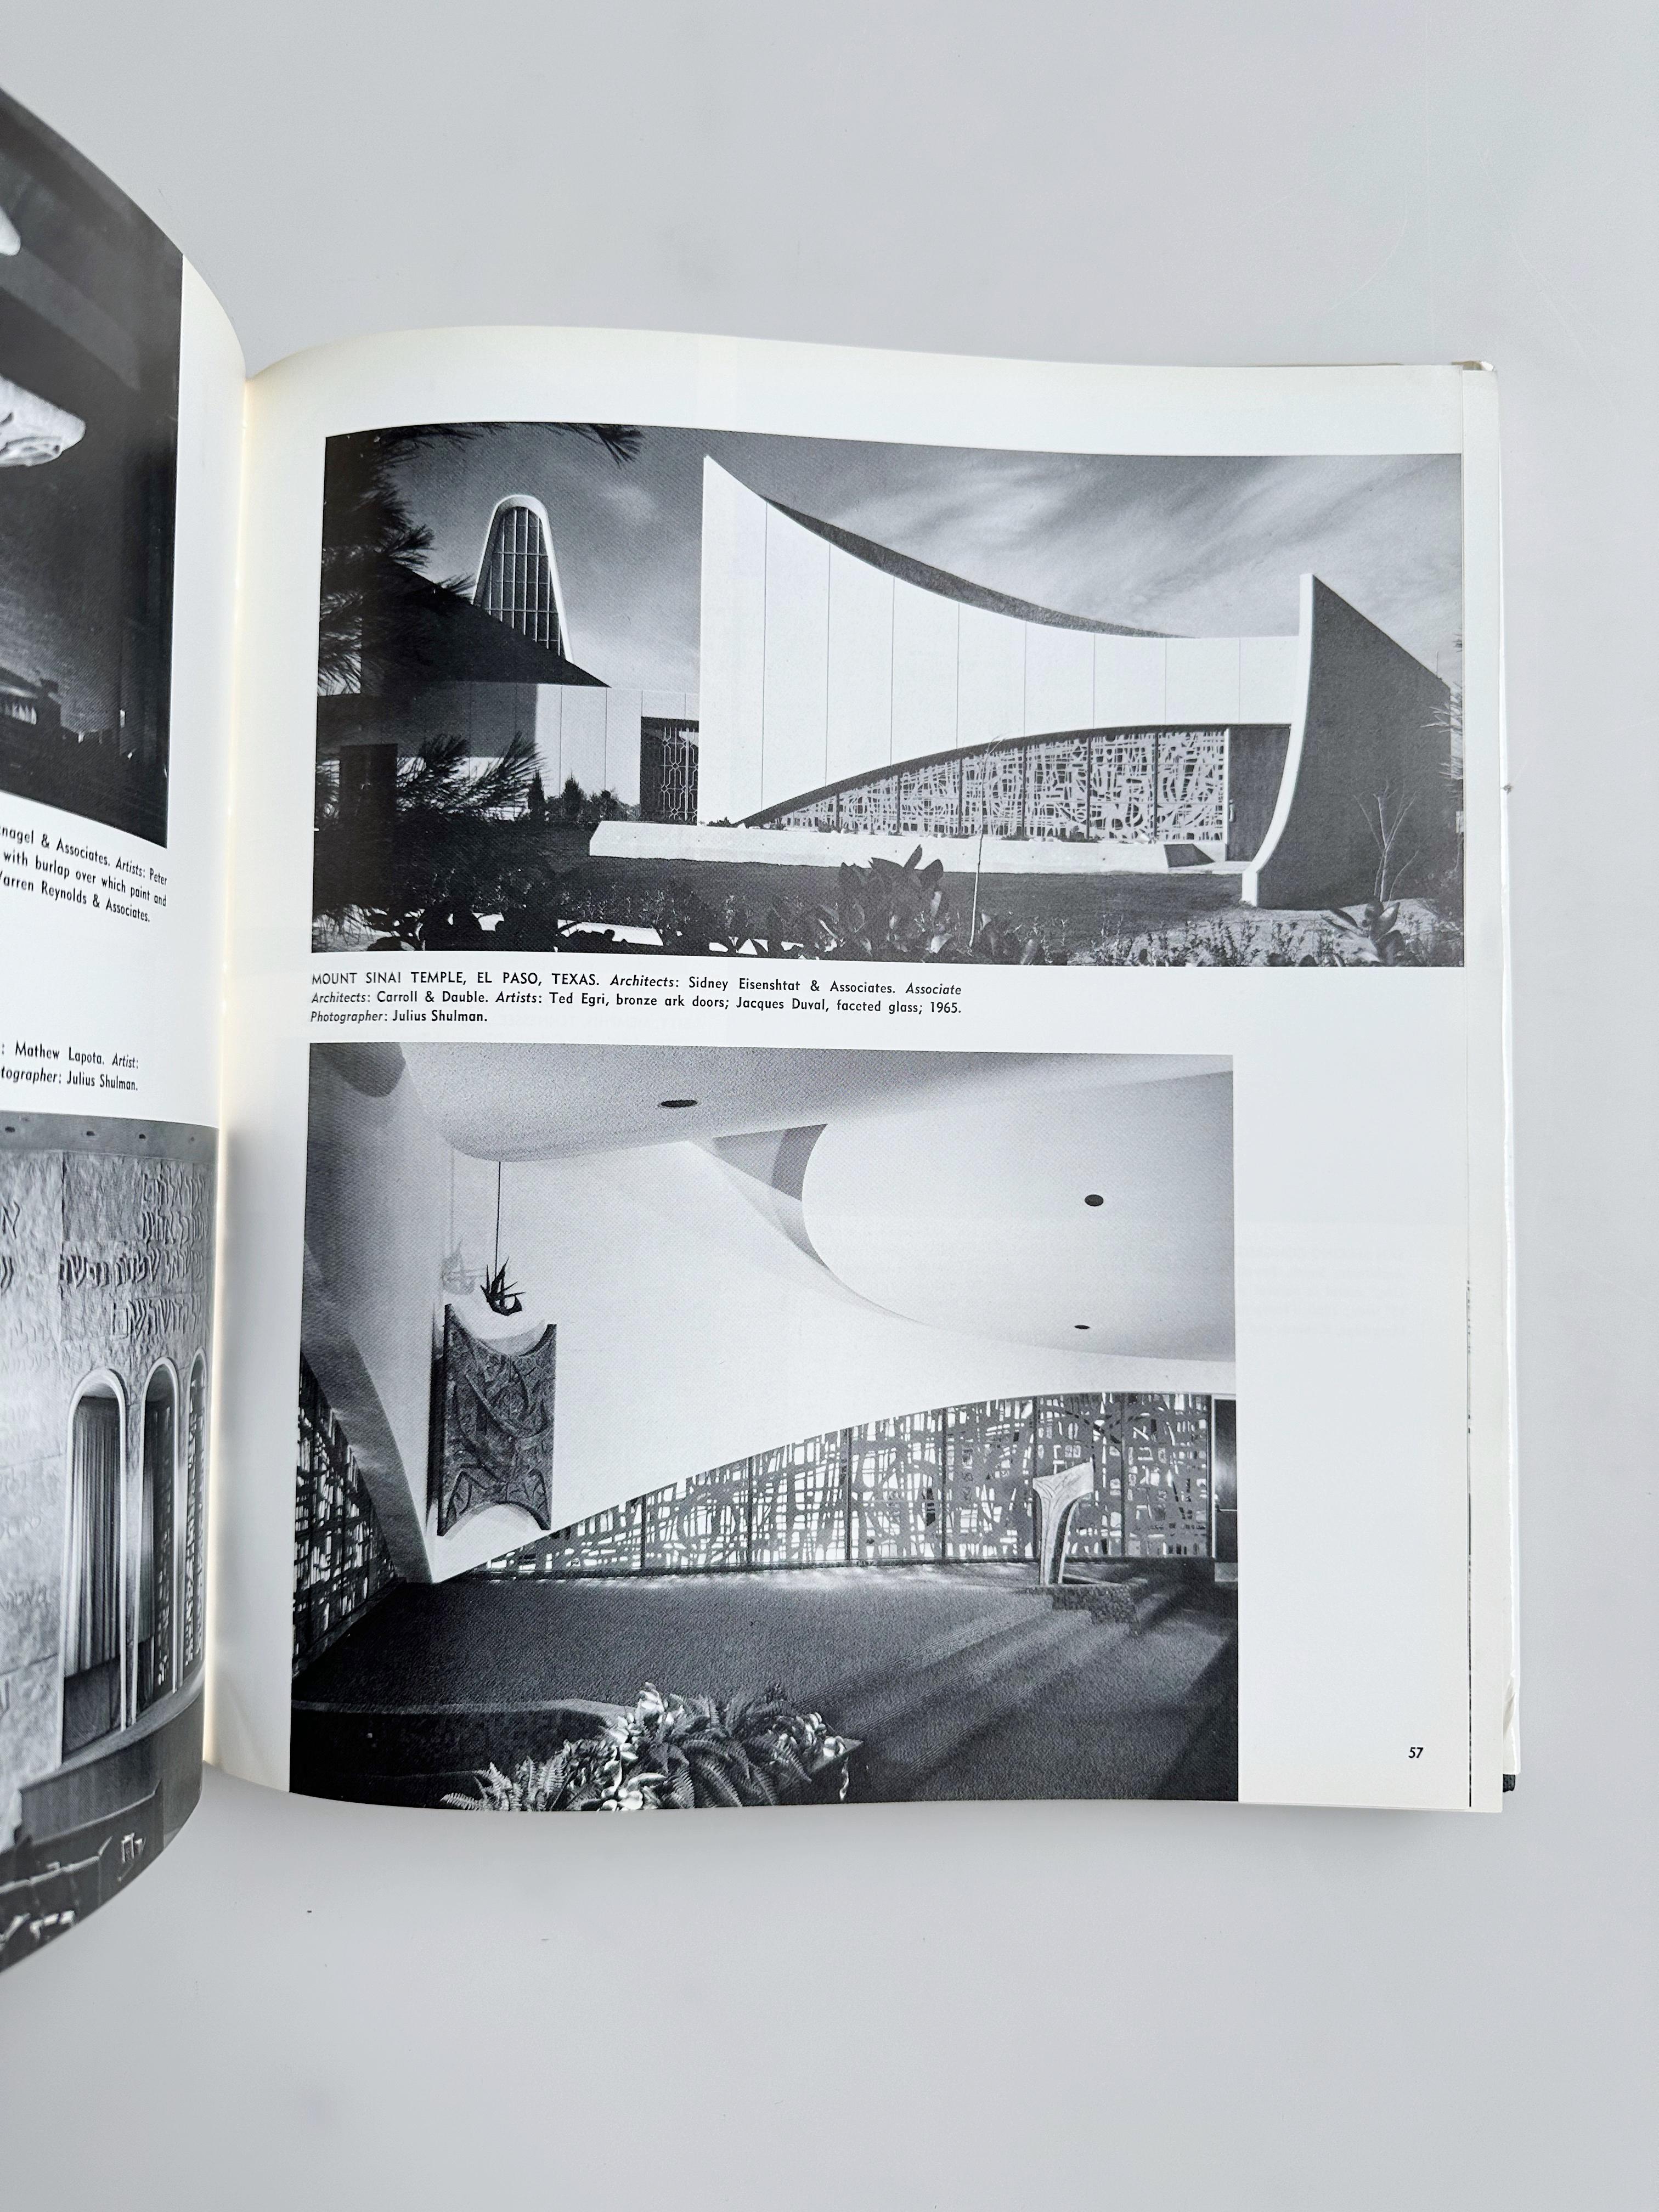 Paper Art in Architecture, Redstone, 1968